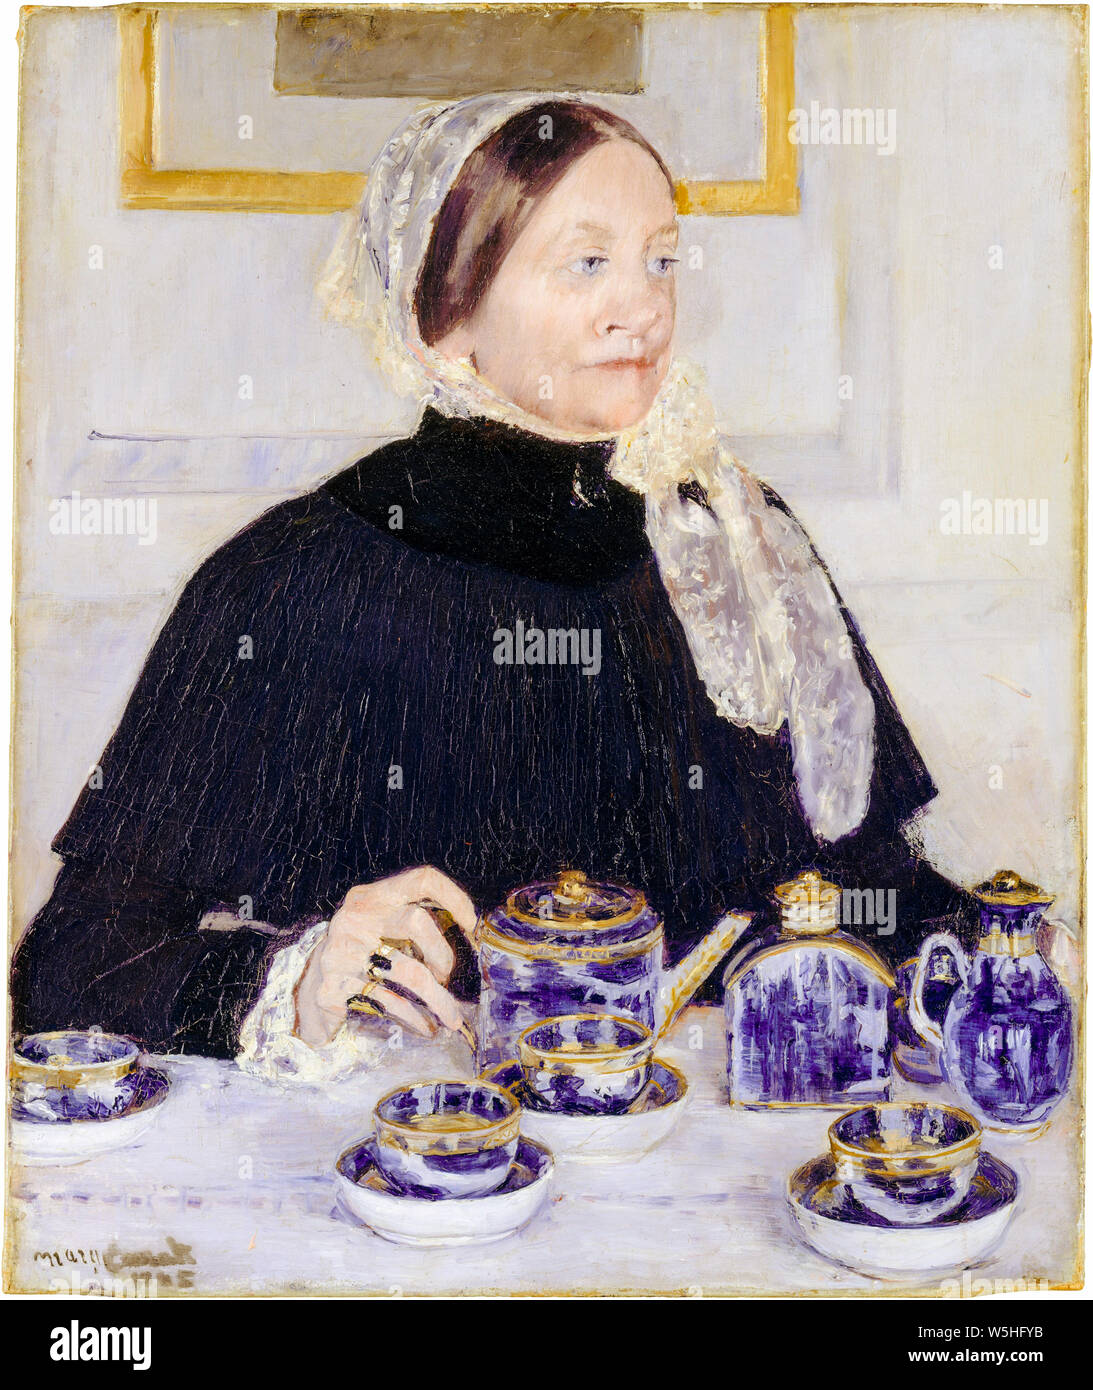 Mary Cassatt, Lady at the Tea Table, portrait painting, 1883-1885 Stock Photo